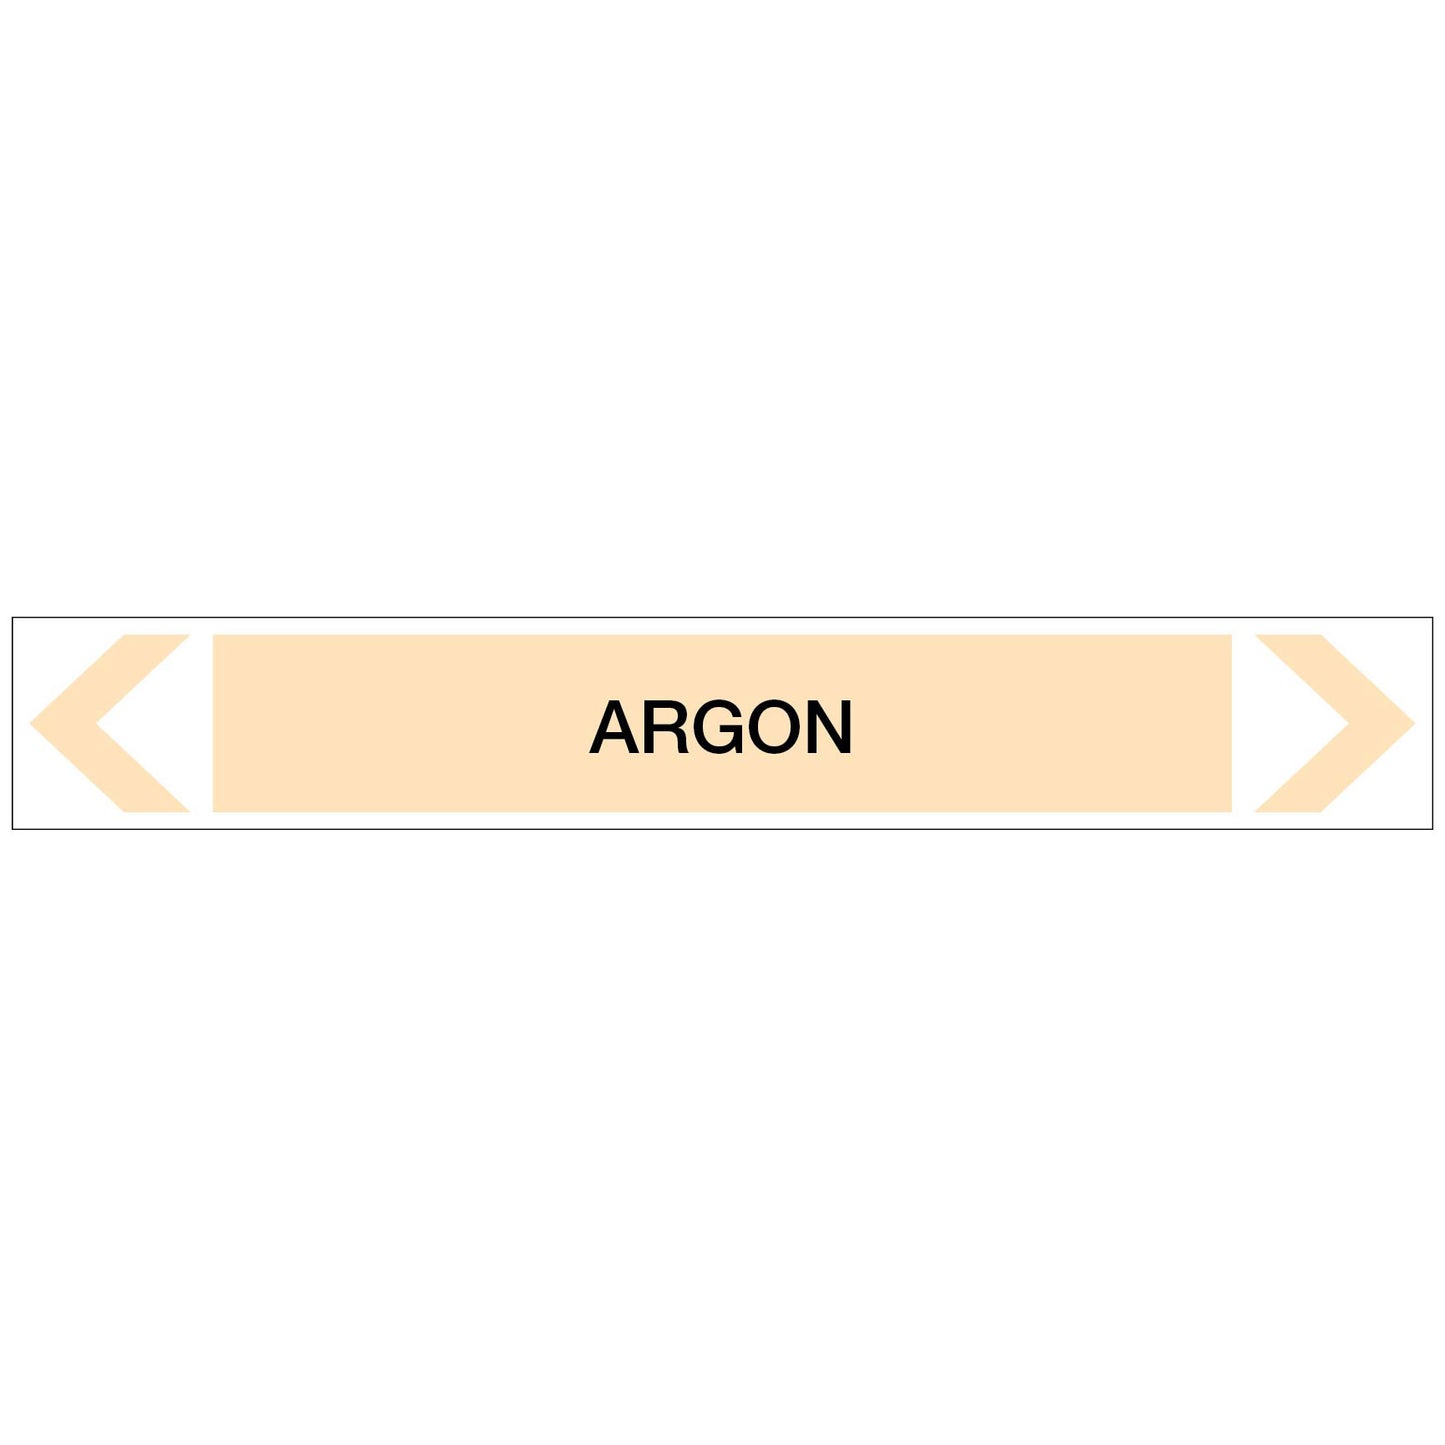 Gases - Argon - Pipe Marker Sticker